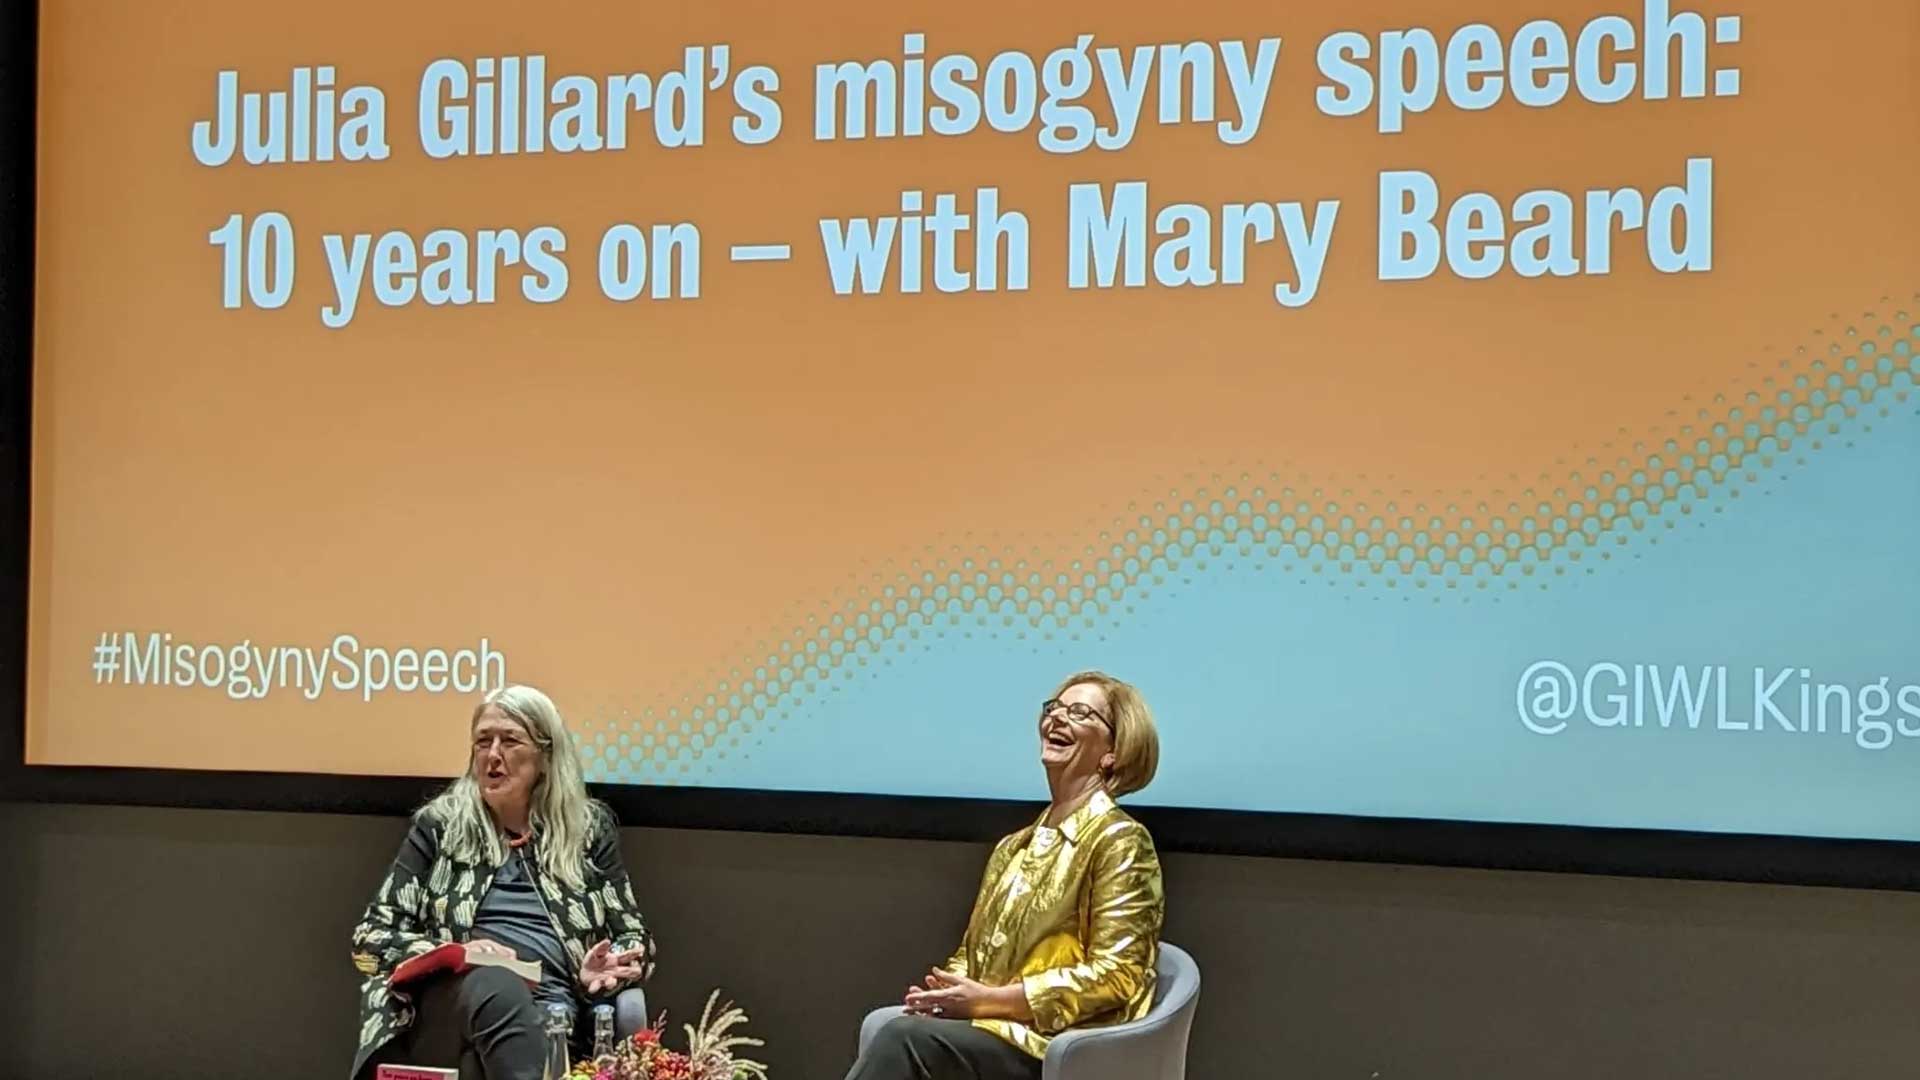 Julia Gillard and Mary Beard on stage, screen behind says "Julia Gillard's misogyns speech ten years on - with Mary Beard"